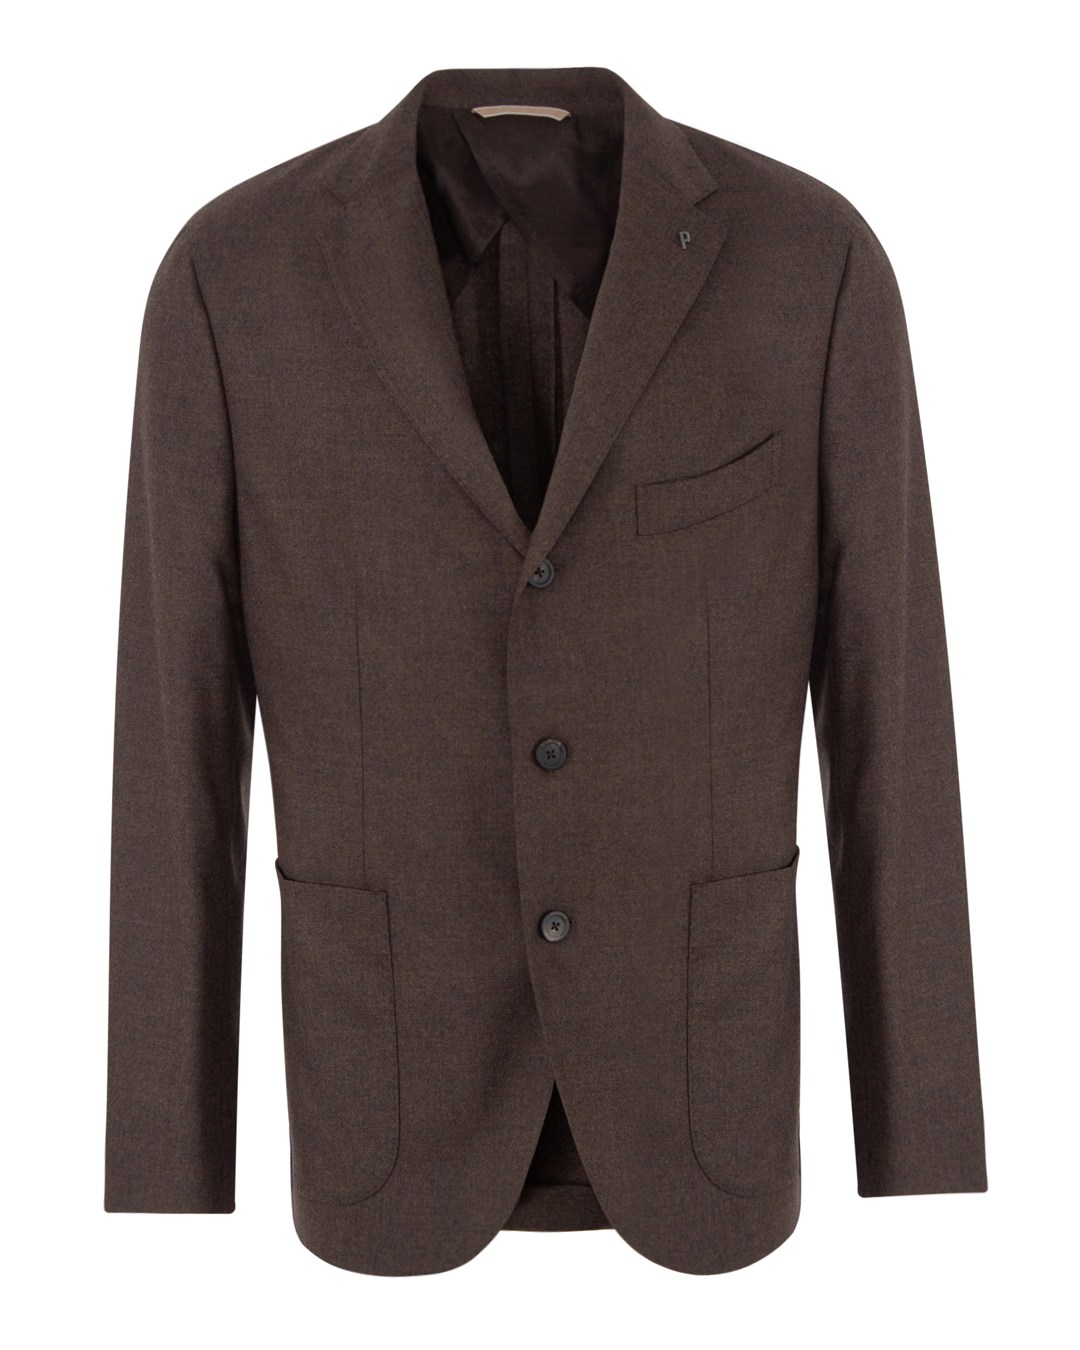 пиджак Peserico R51509 коричневый 54, размер 54